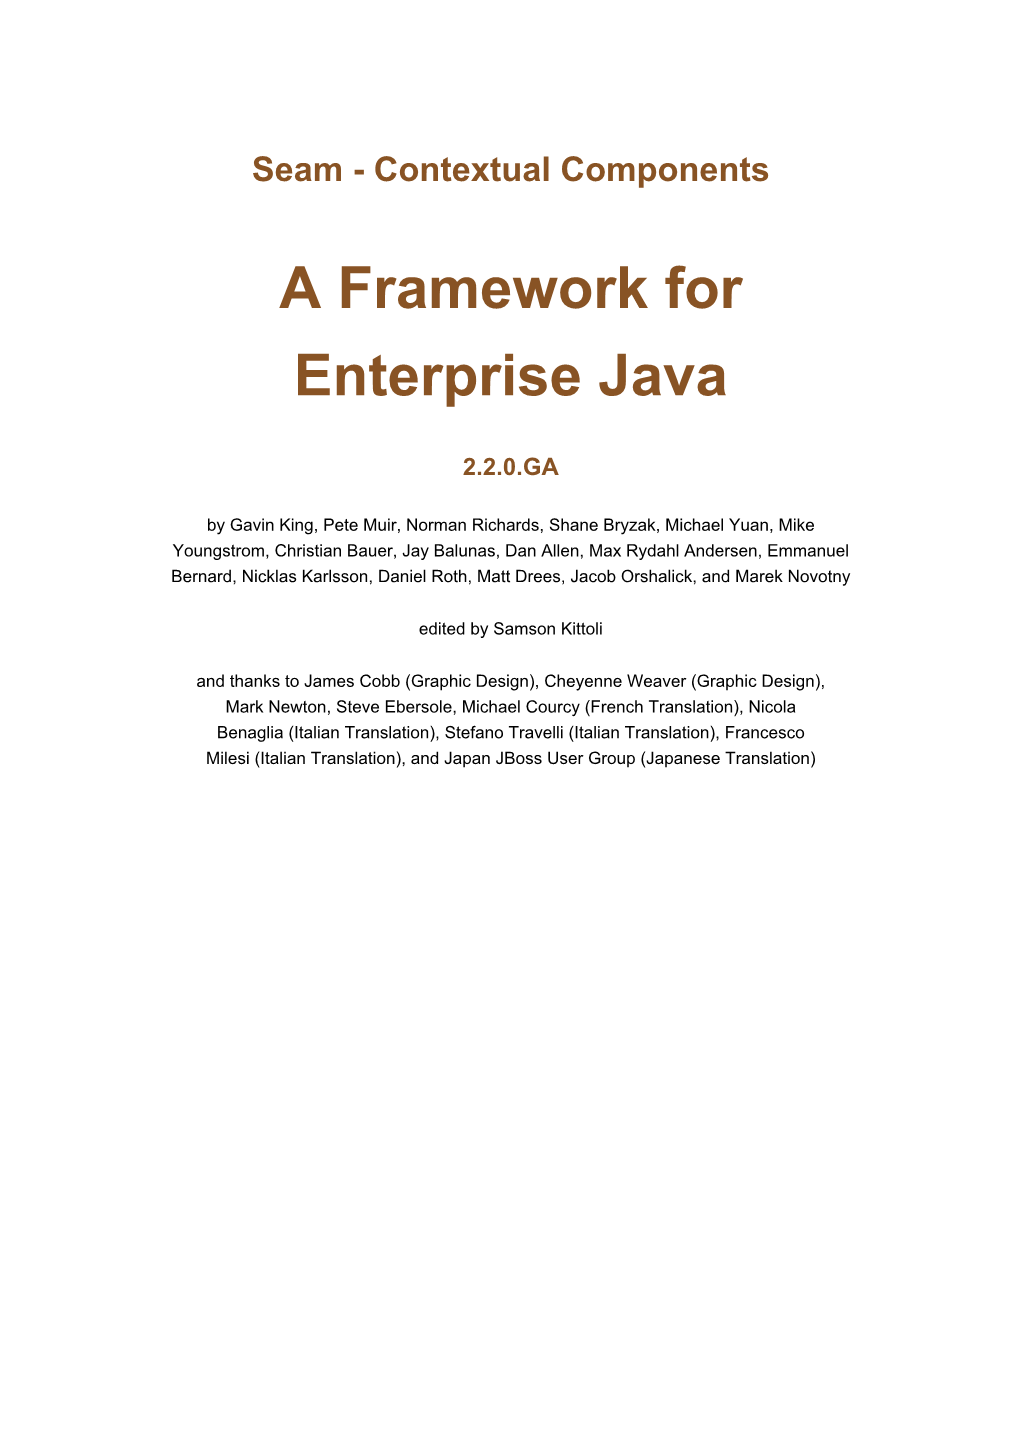 A Framework for Enterprise Java